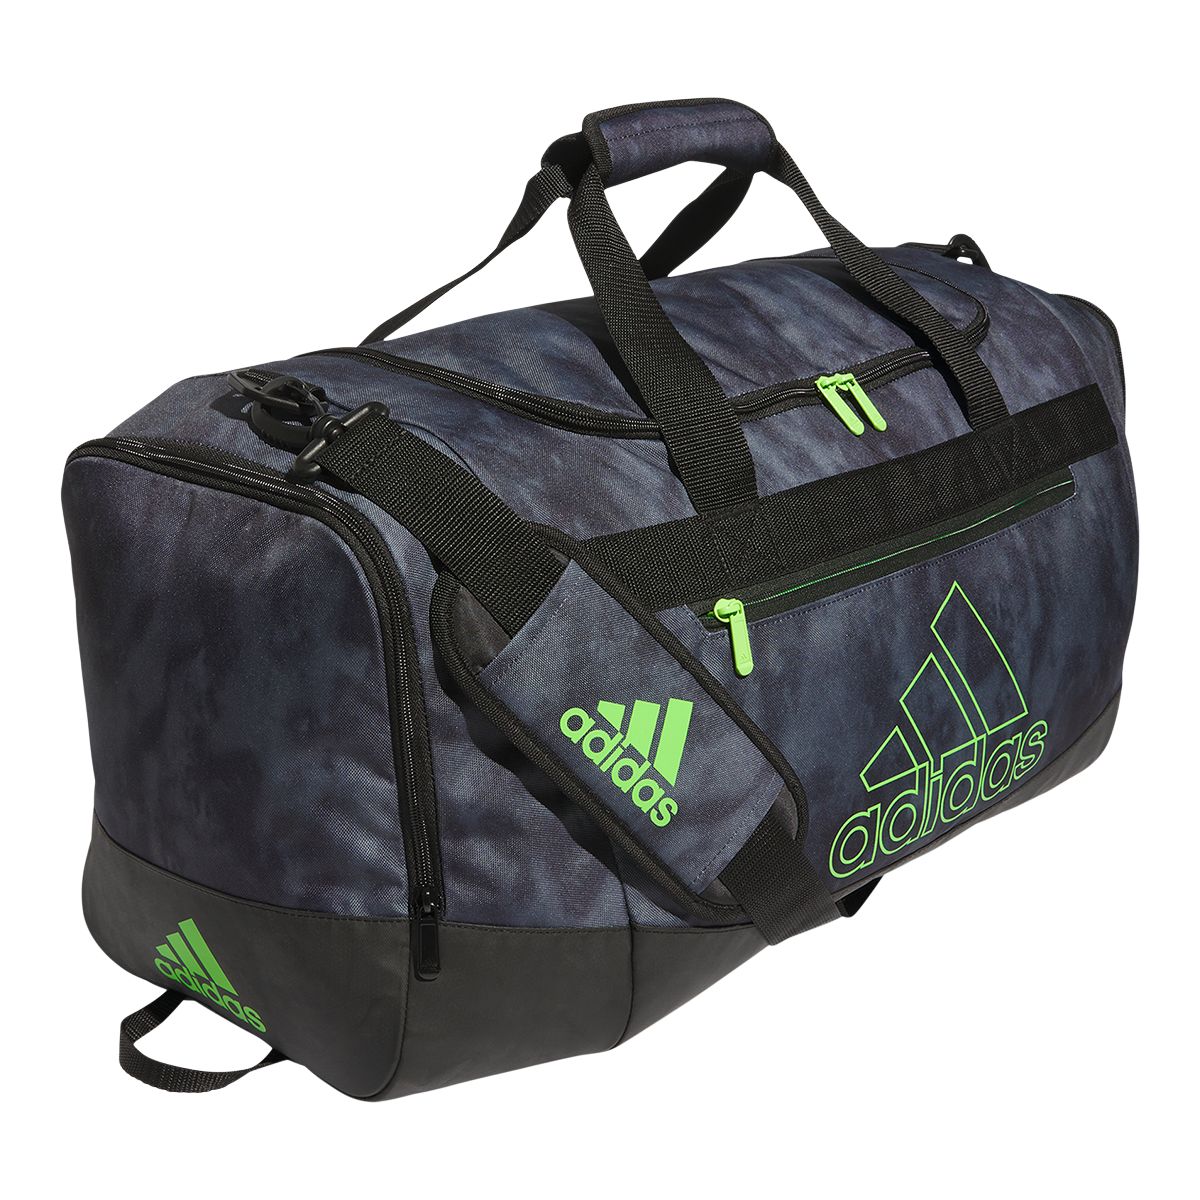 Forclaz 500 Extend 40-60 L Duffel Bag in Teal Green, Size 40 L